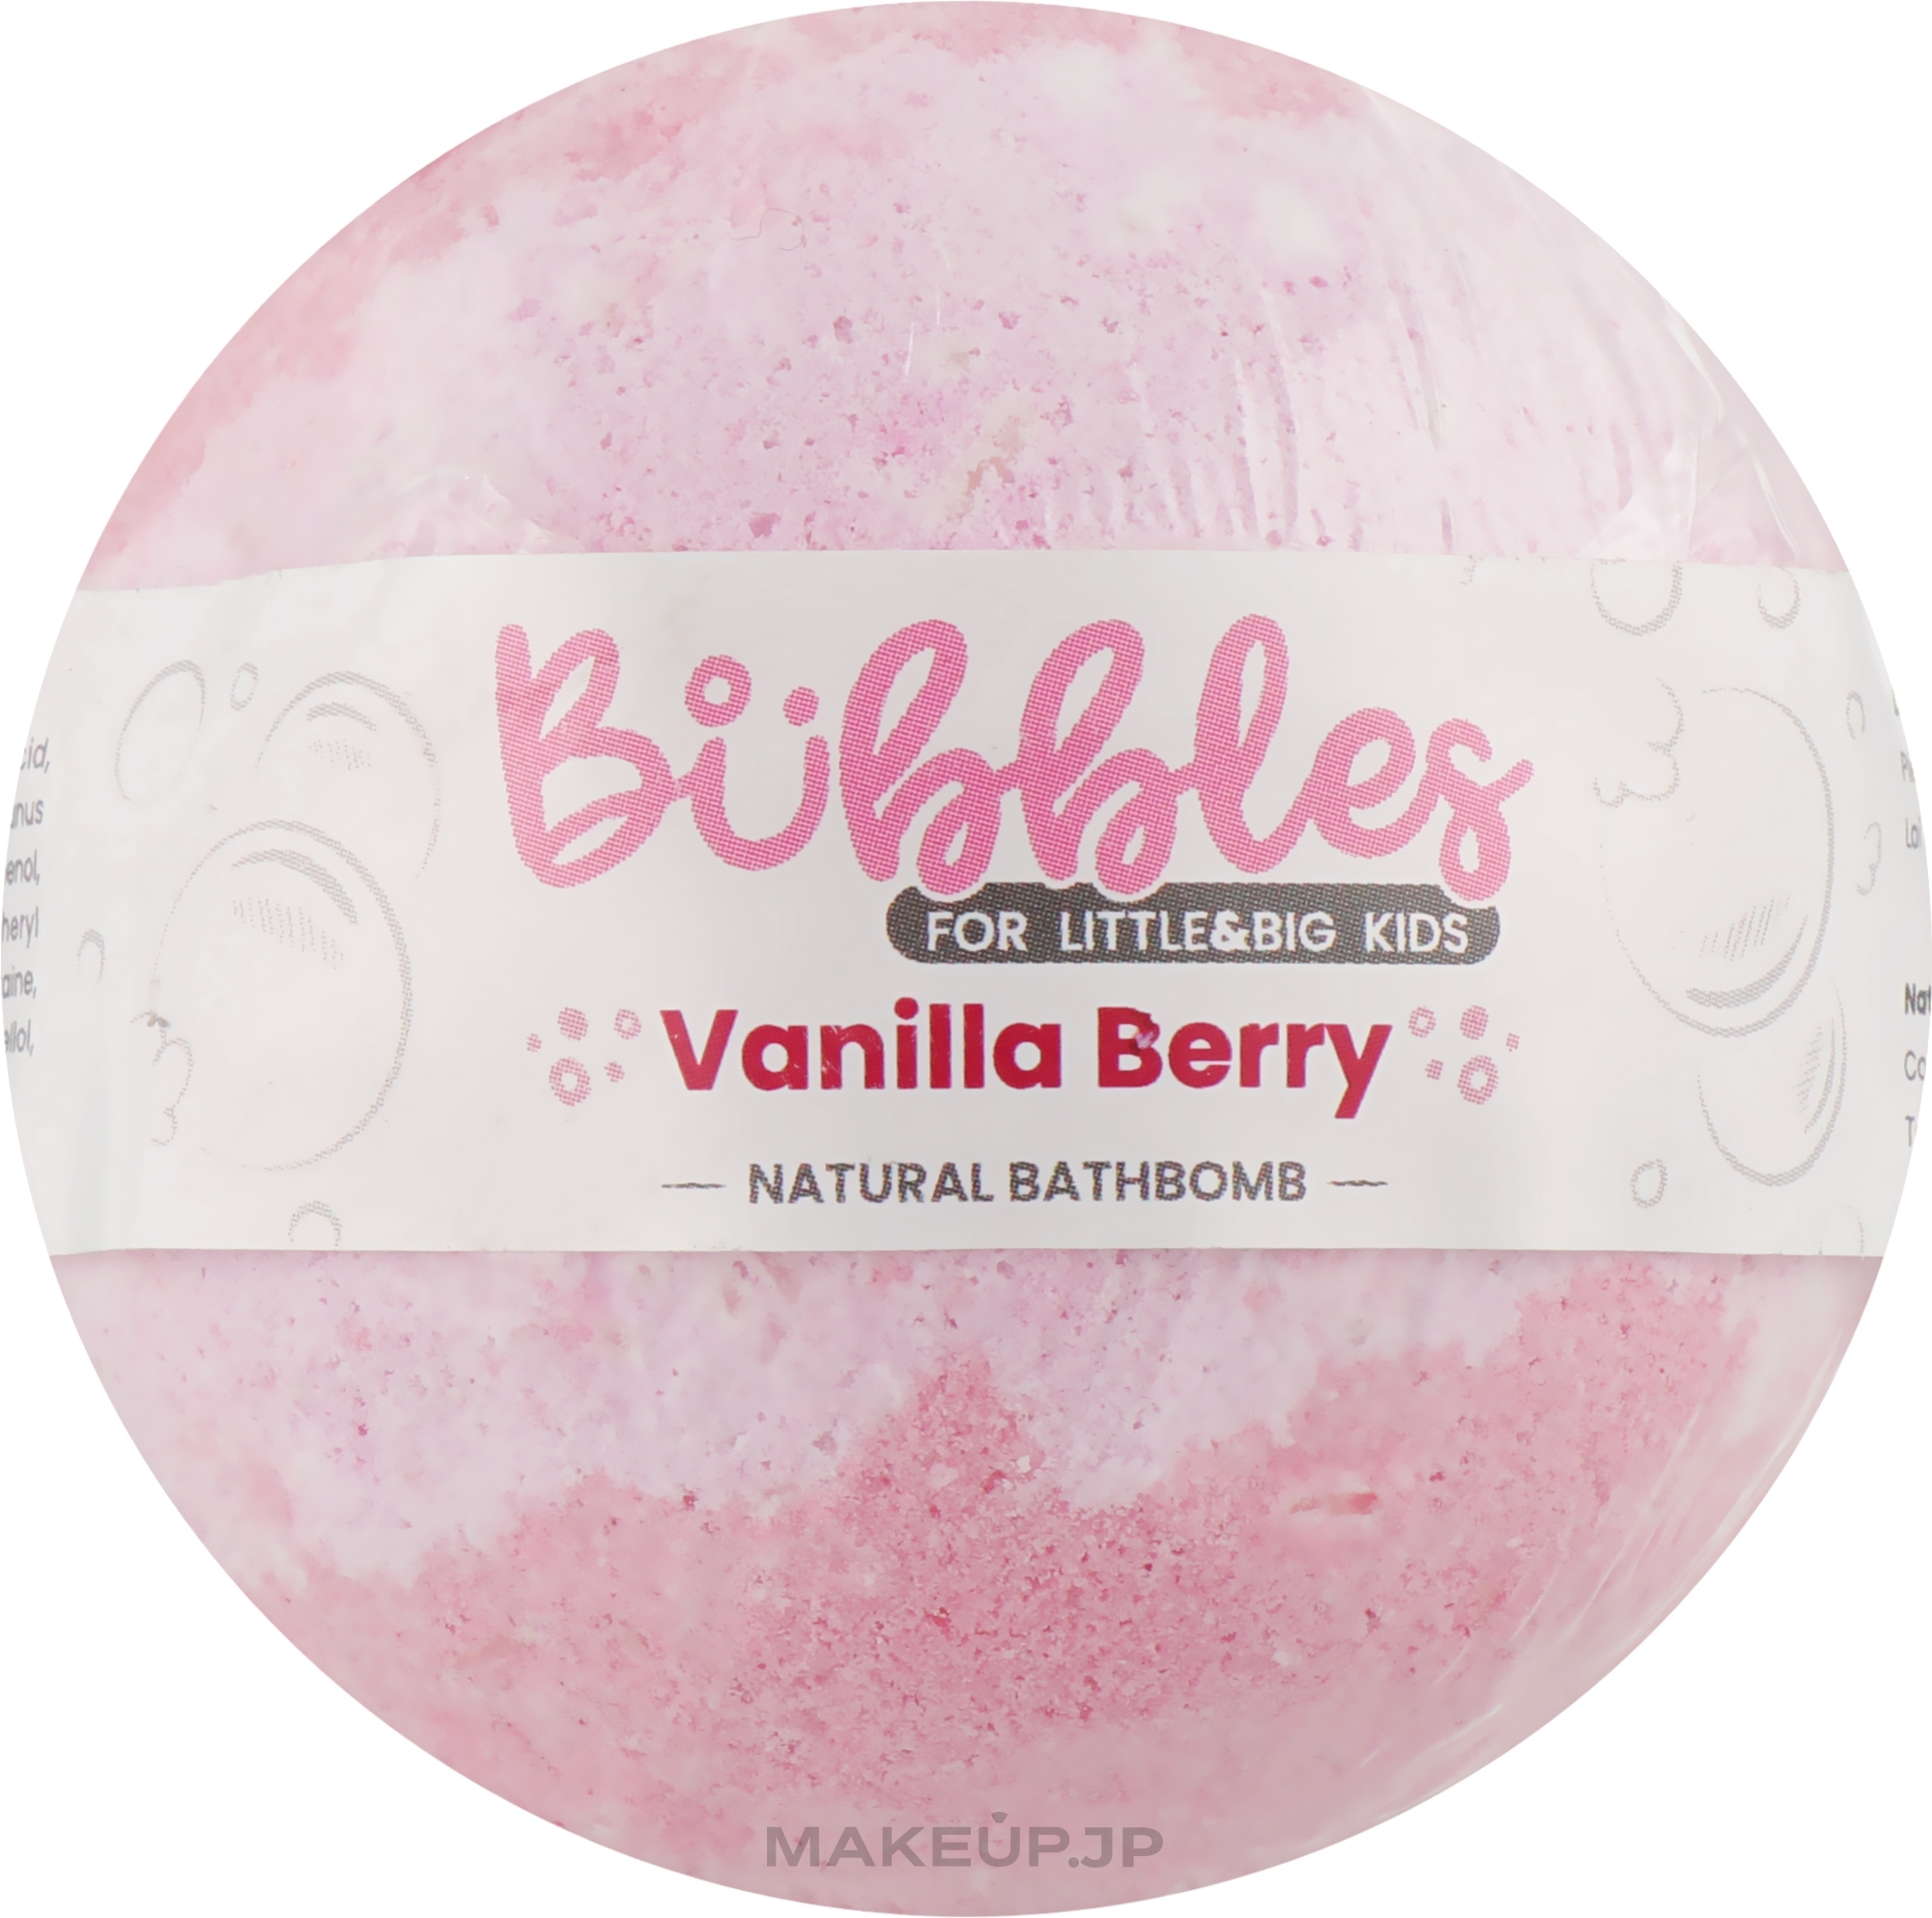 Kids Bath Bomb - Bubbles Vanilla Berry Natural Bthbomb — photo 115 g